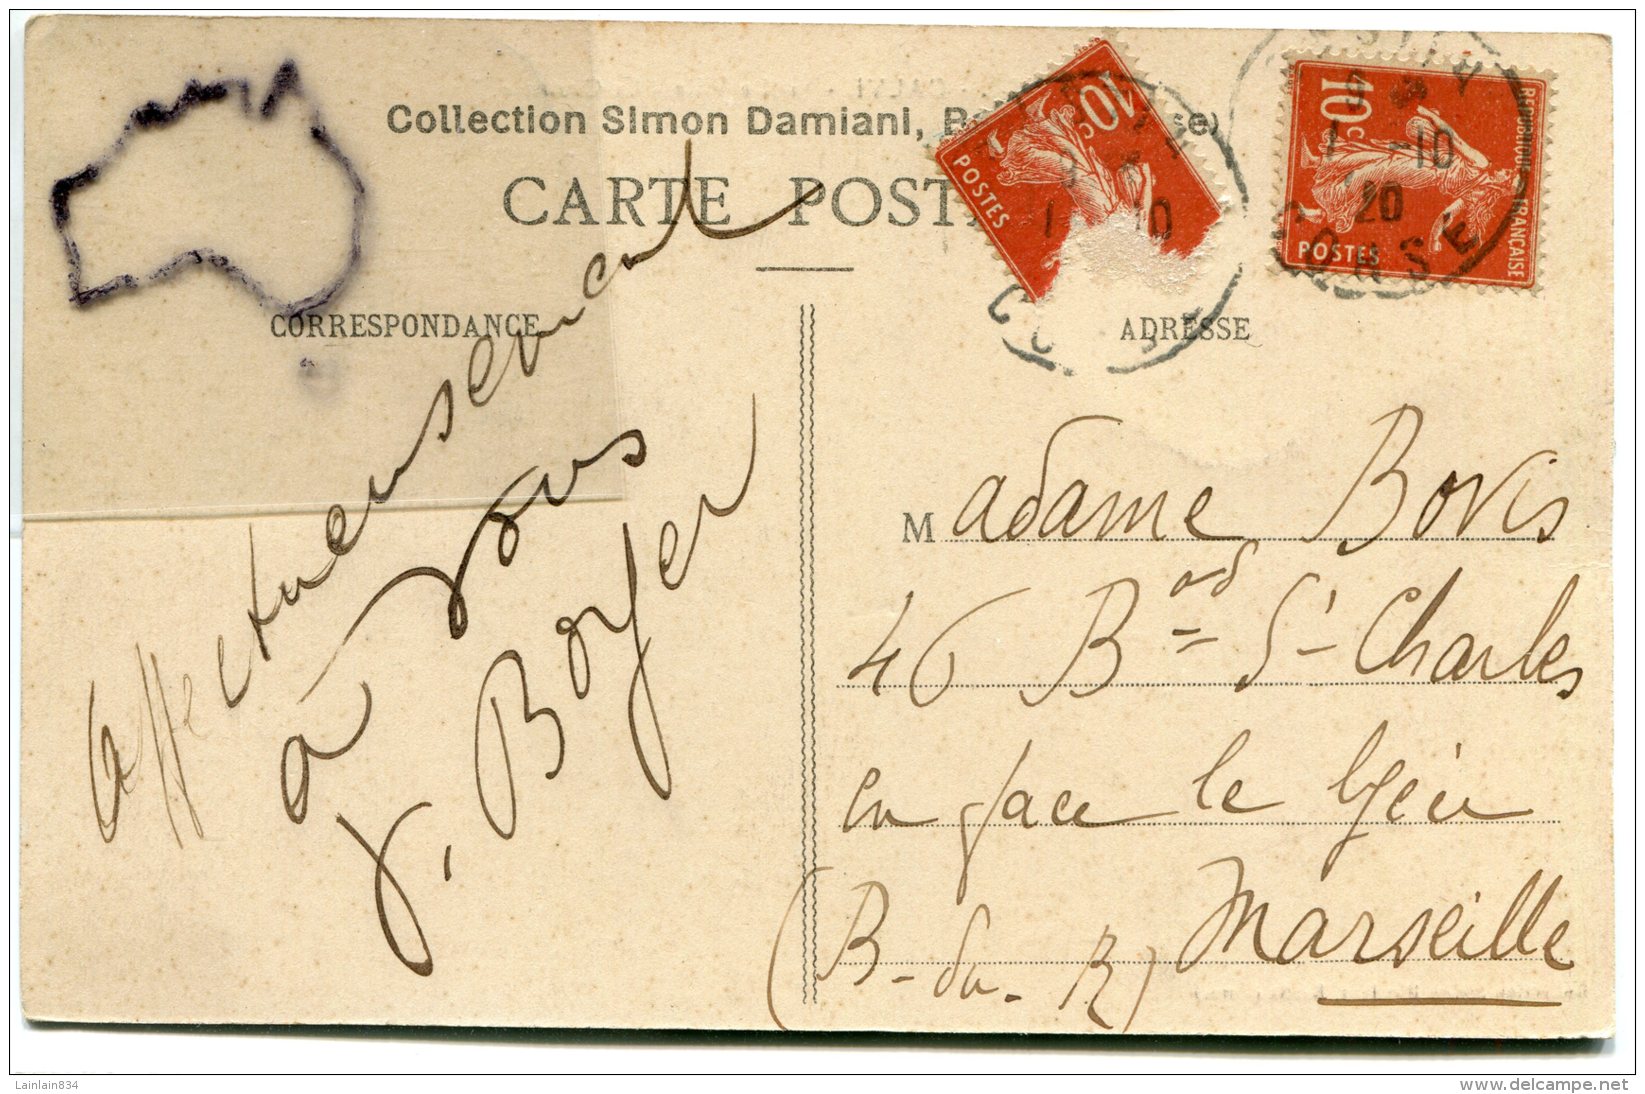 - 413 - CALVI - ( Corse ), Vieille Ville, Citadelle, écrite, 1920, Pour Marseille, TBE, Scans. - Calvi